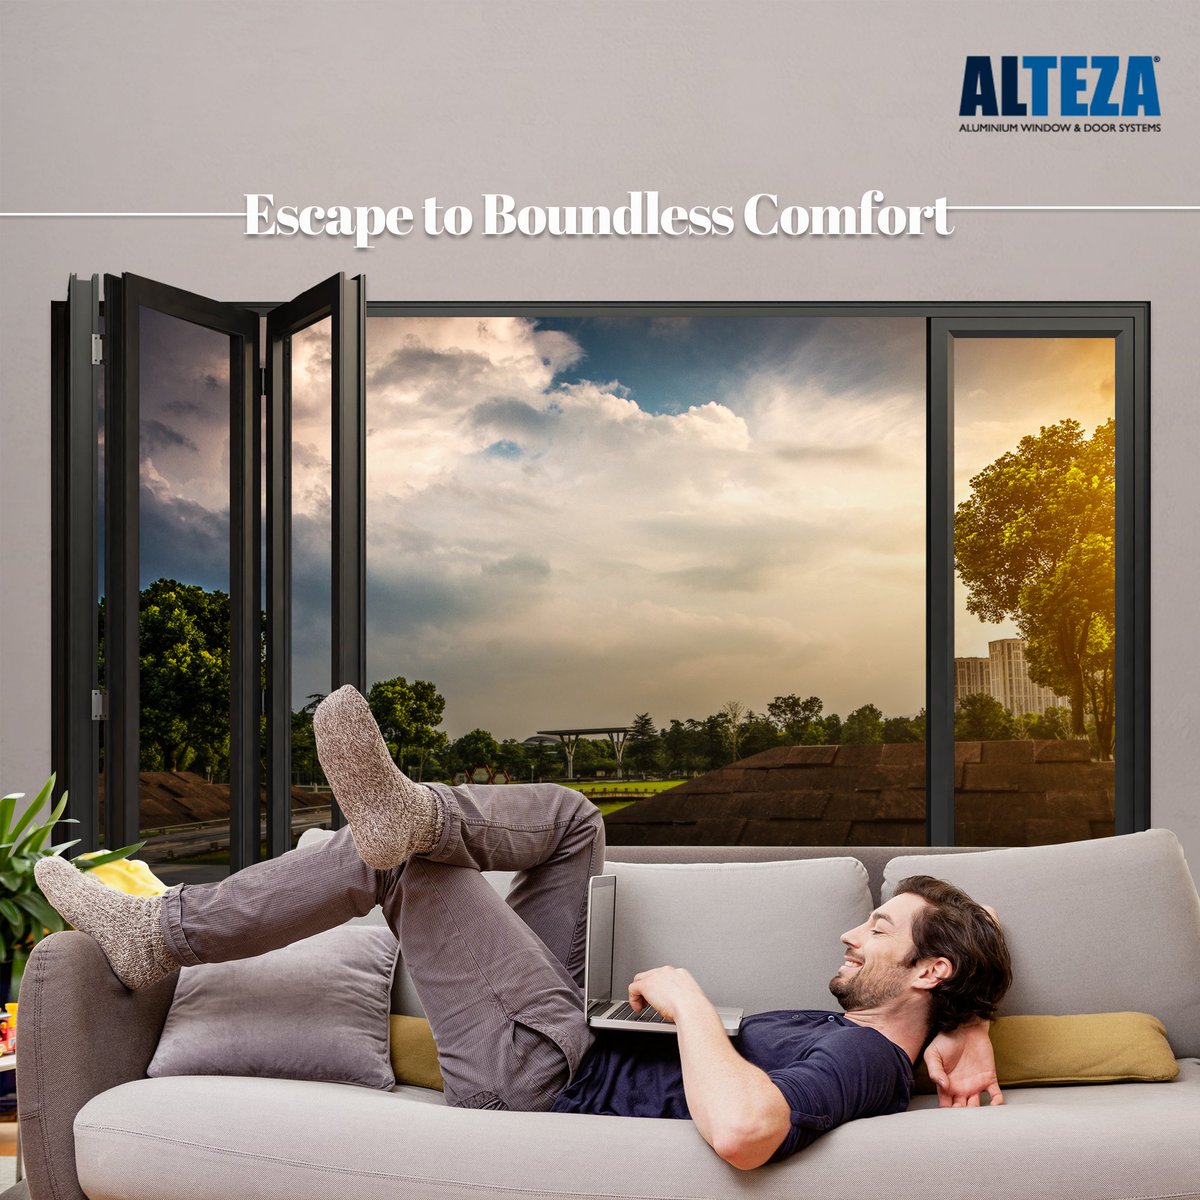 Step into a world of comfort and style with Alteza's Premium Aluminum Doors.

#aluminium #aluminiumwindows #ökotech #upvcwindows #upvcdoors #upvcprofiles #upvc